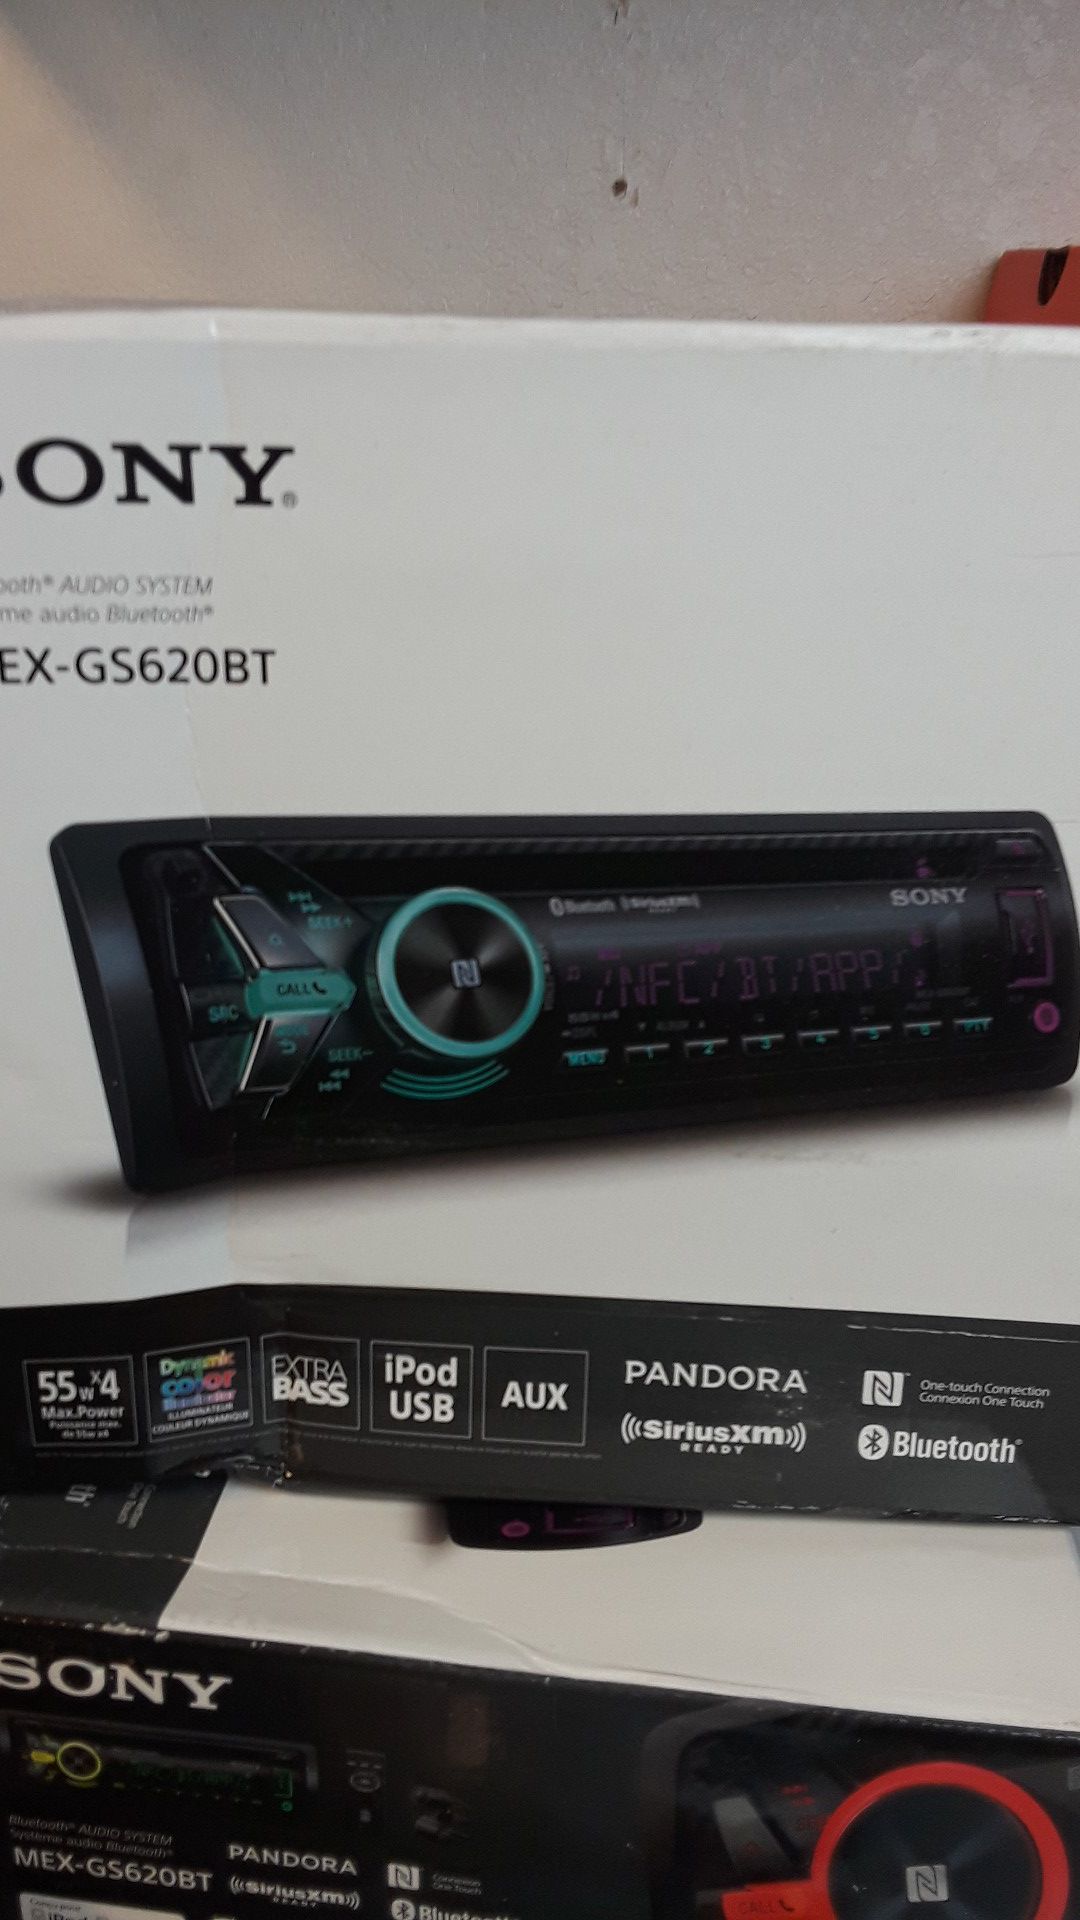 Sony MEX-GS620BT car stereo. Radio bluetooth wireless technology.